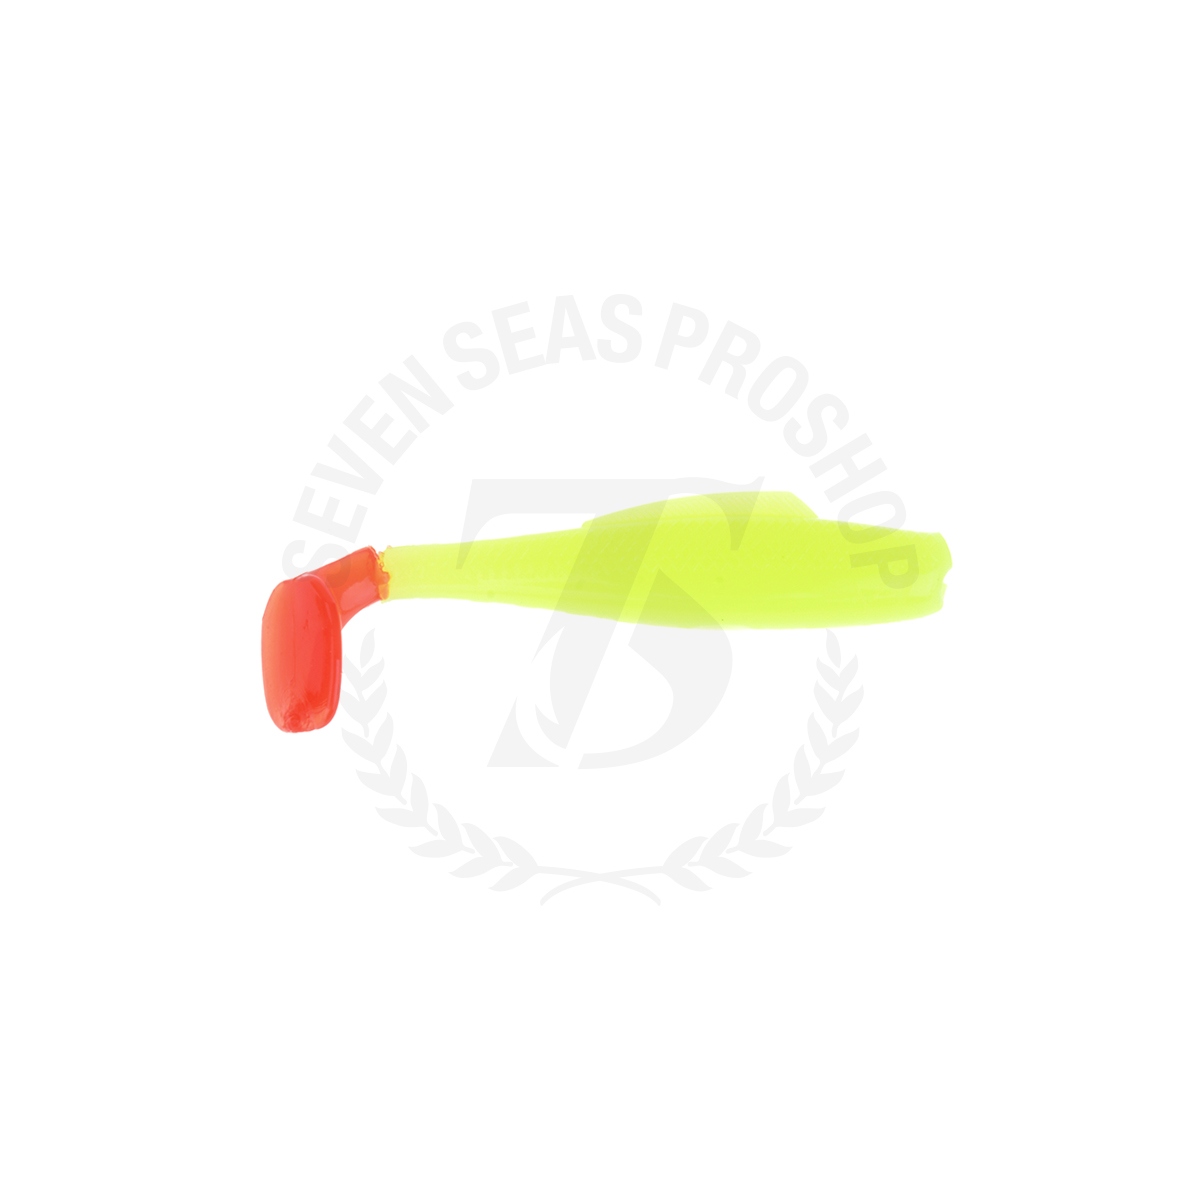 Z-Man Minnow Z 3 #Chartreuse/Red Tail*เหยื่อปลายาง - 7 SEAS PROSHOP  (THAILAND)